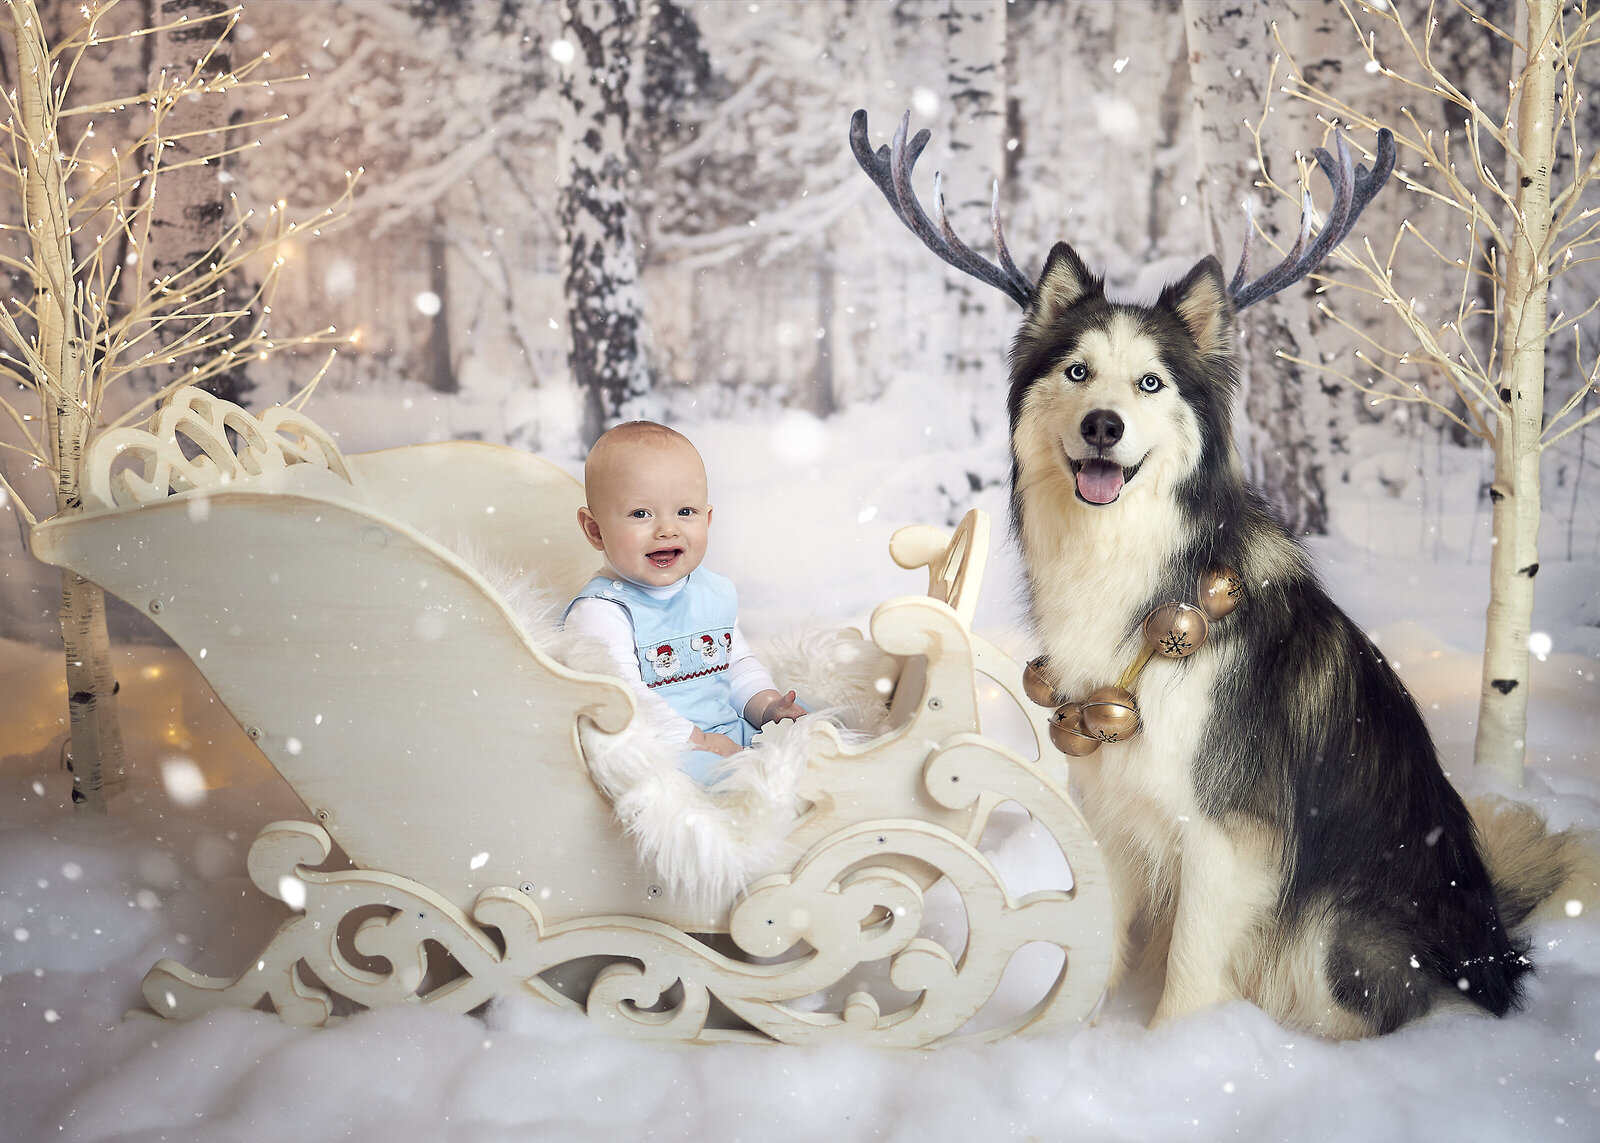 atlanta-best-award-winning-baby-boy-christmas-snow-santa-suit-sleigh-session-husky-dog-reindeer-photography-photographer-twin-rivers-01